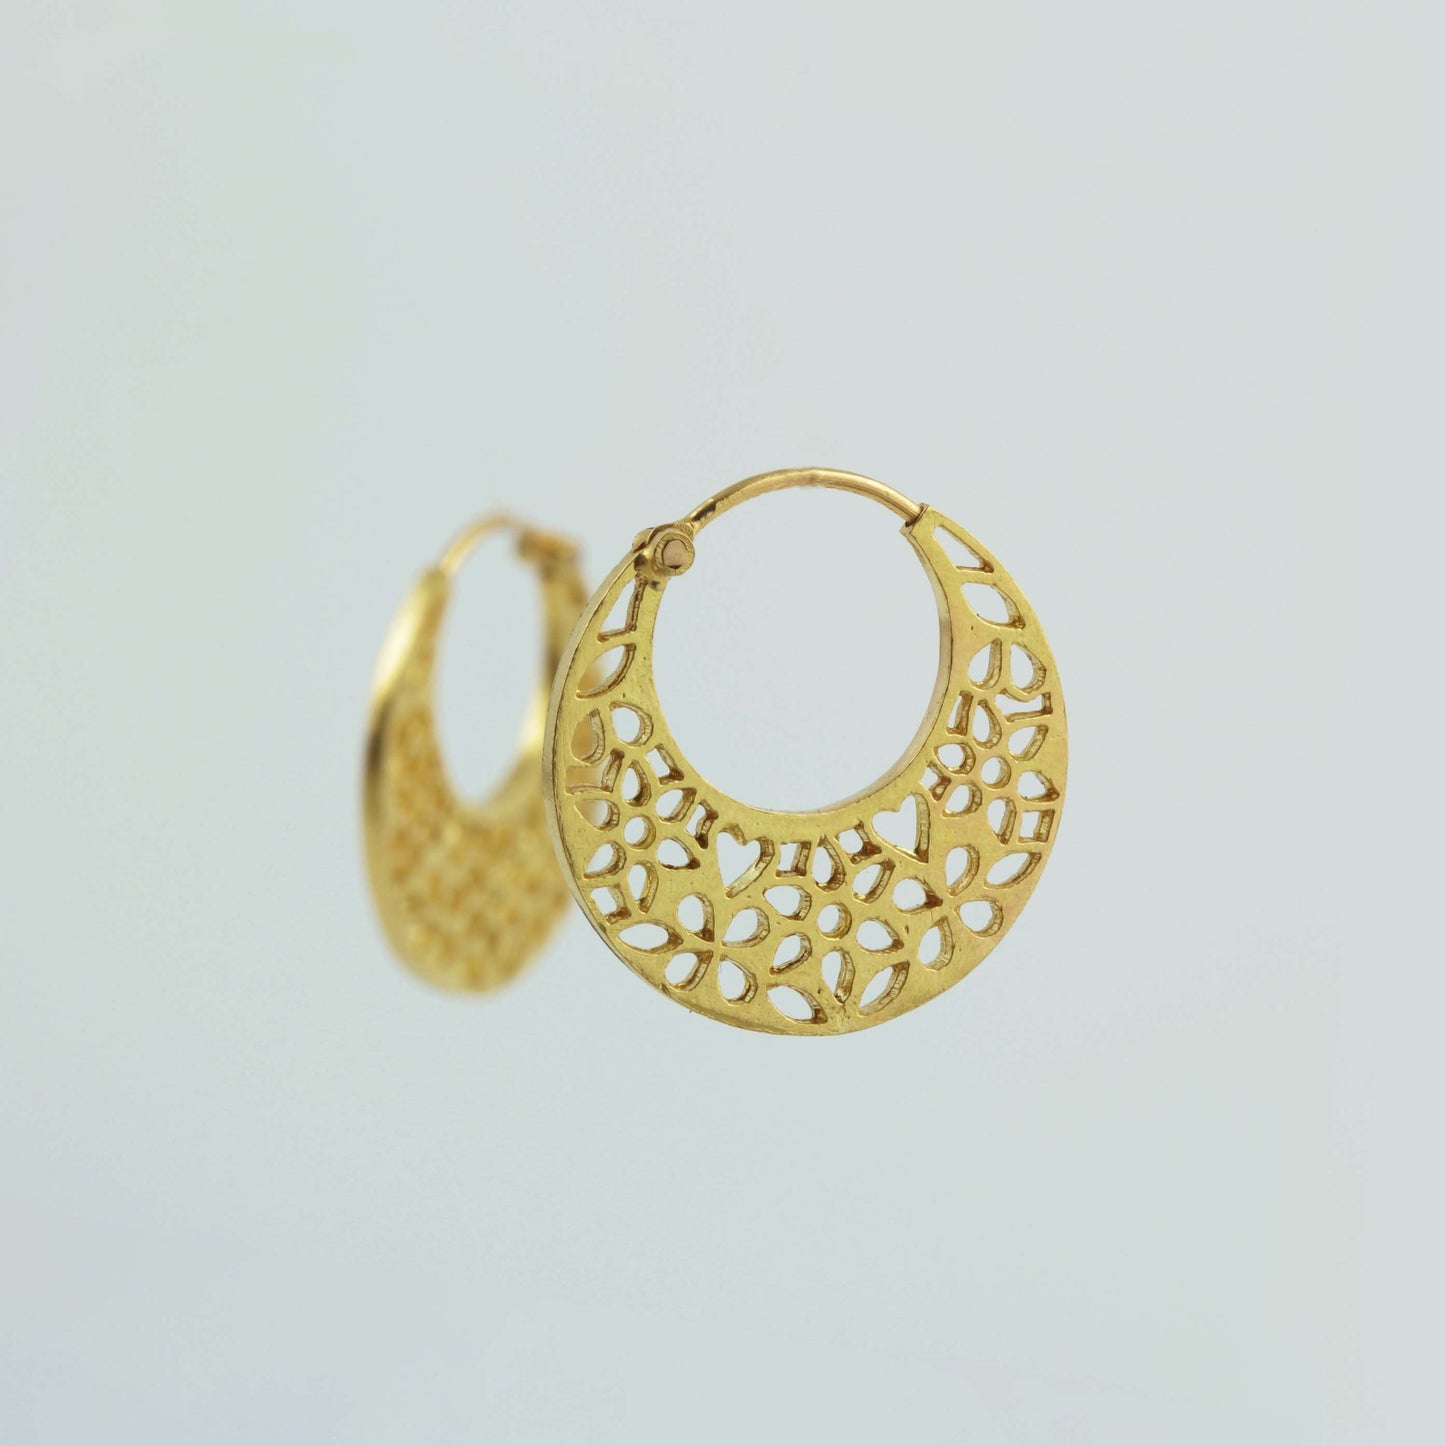 The Swapna Lace Series Gold Bali by Rasvihar